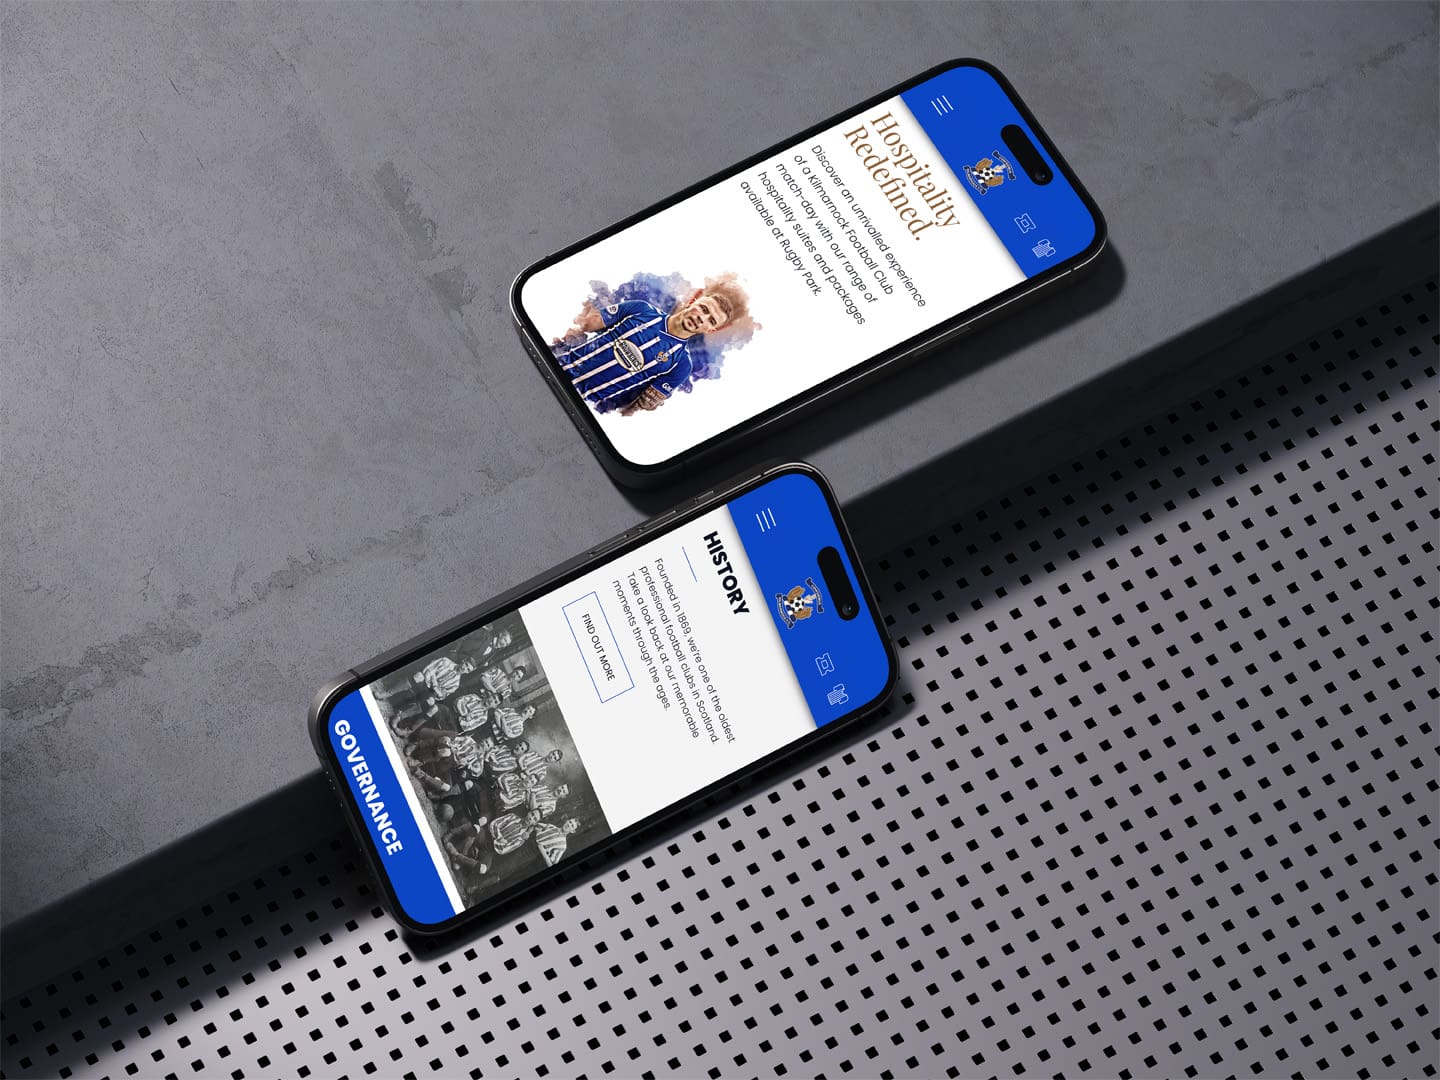 iPhone devices illustrating the Kilmarnock Football Club website